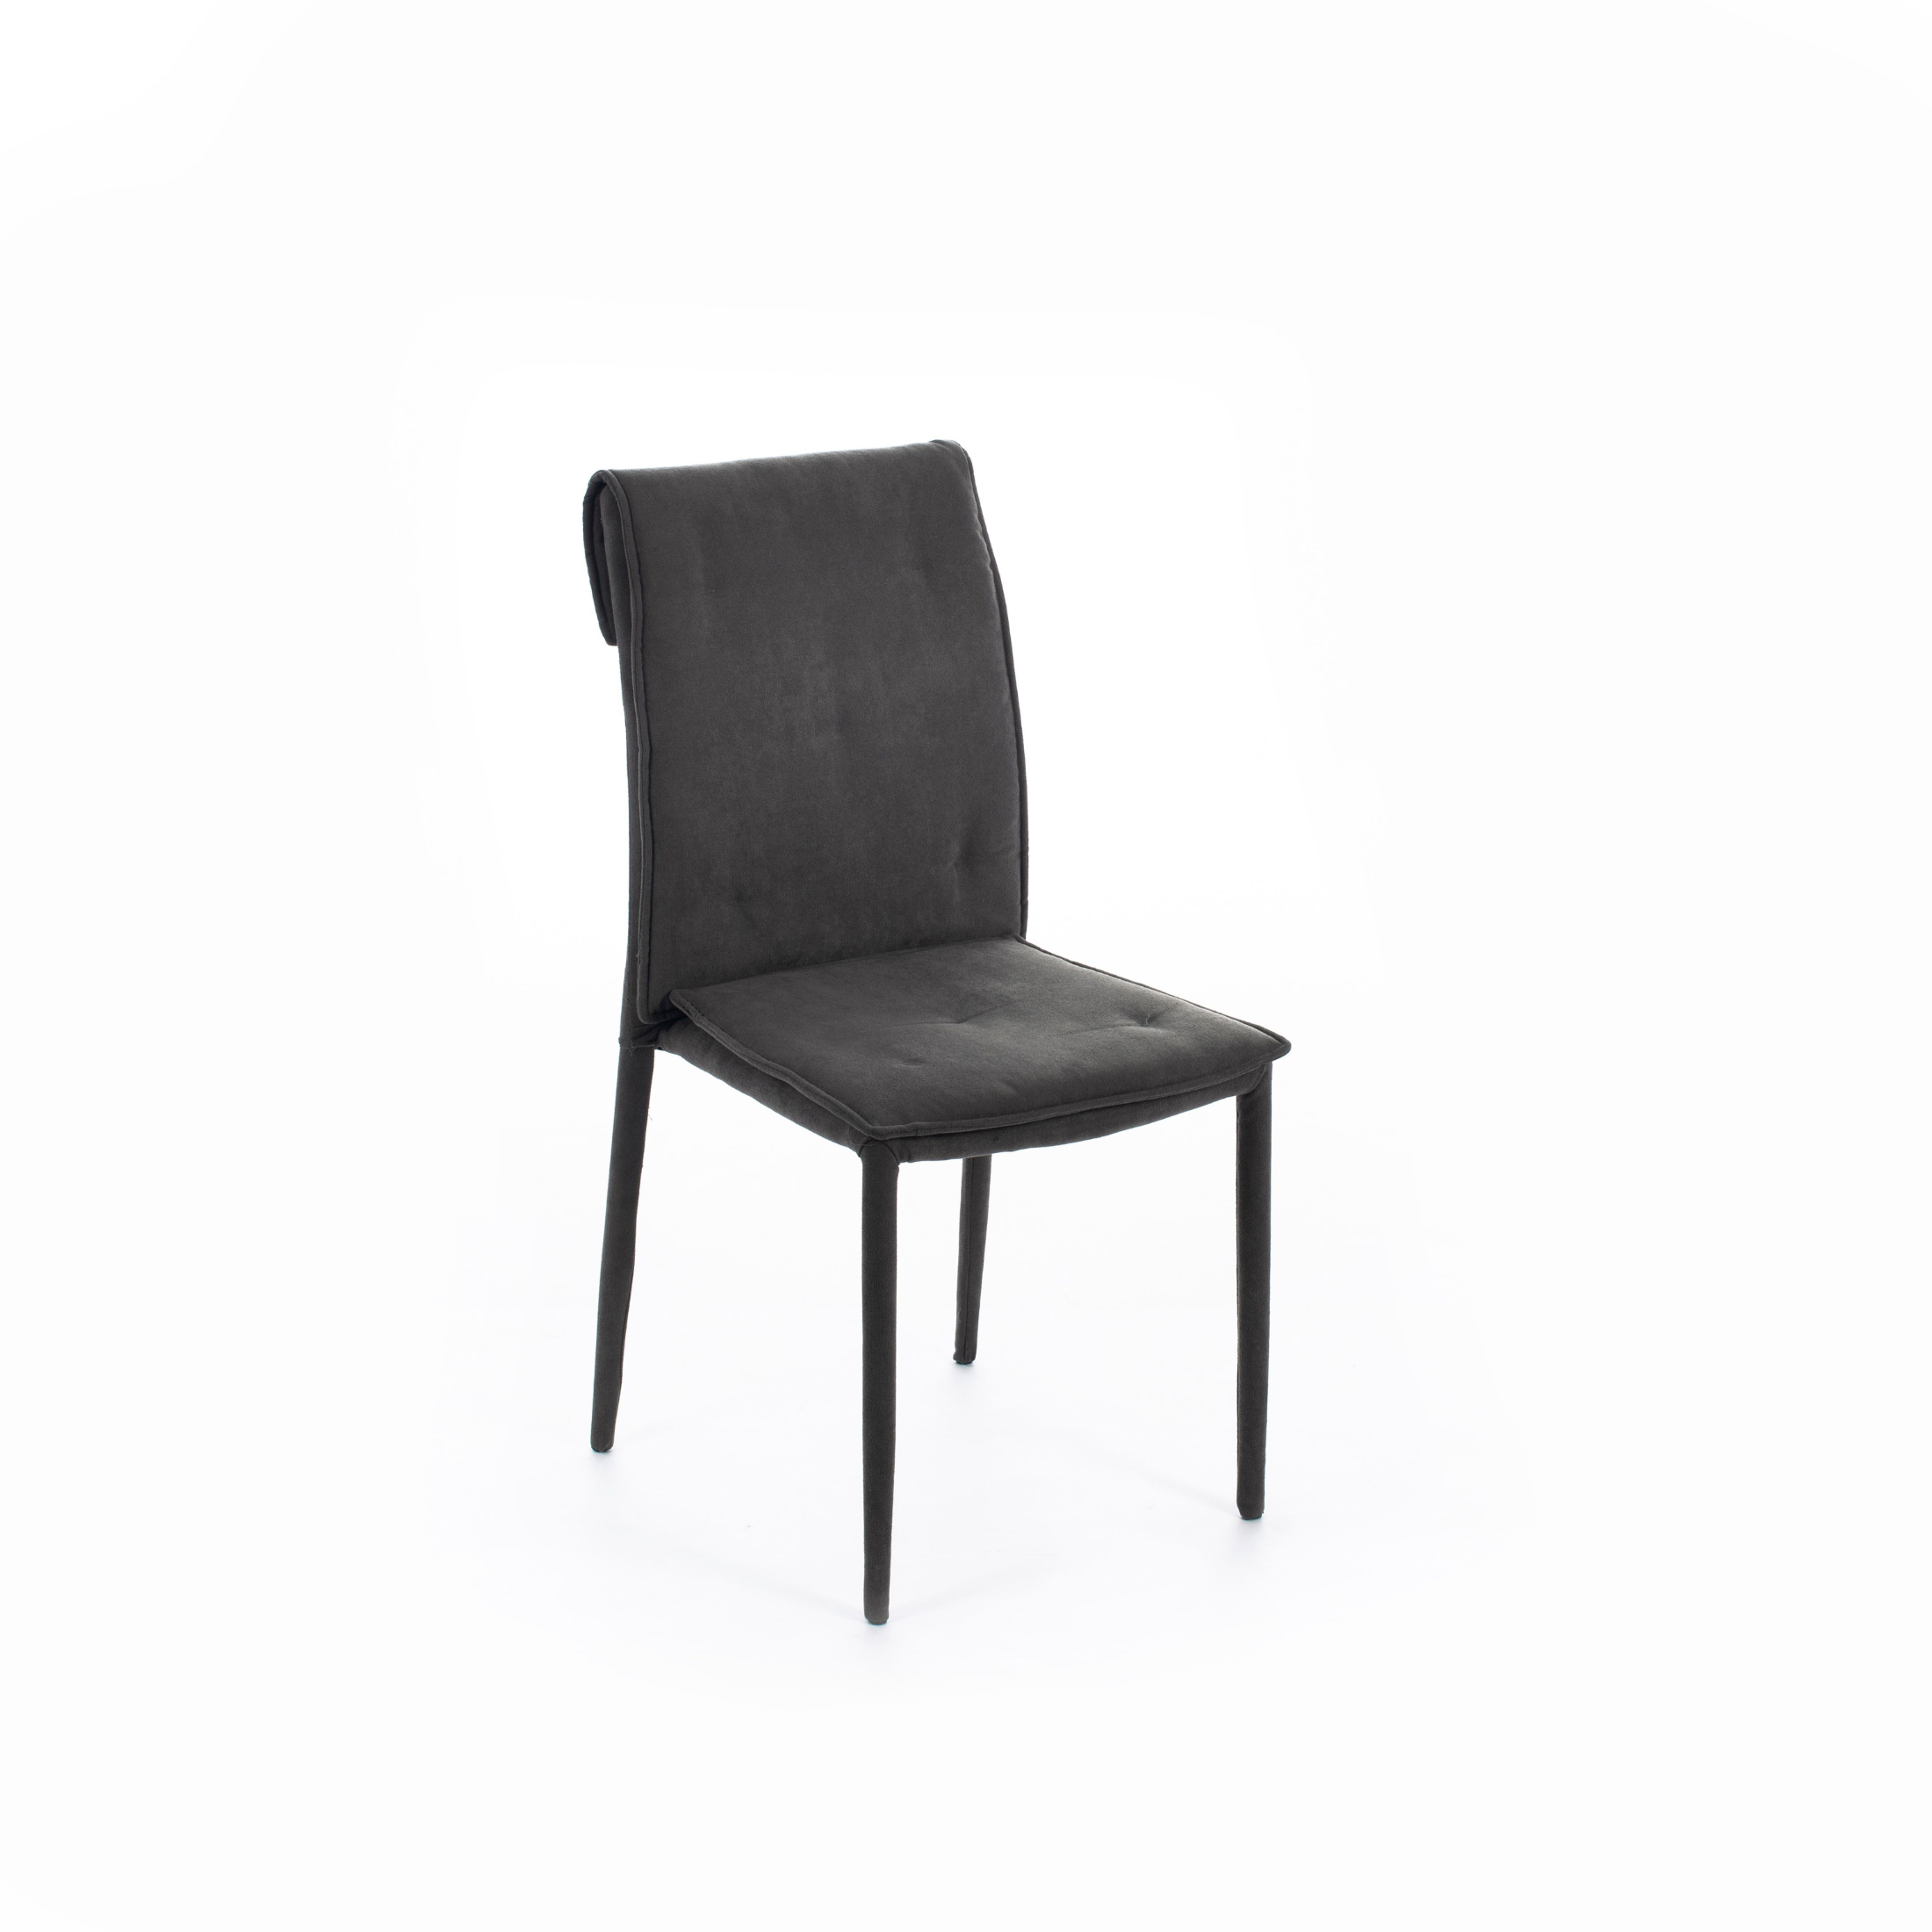 Set di sedie imbottite in tessuto "Wanda" moderne con gambe in metallo rivestite cm 44x56 91h